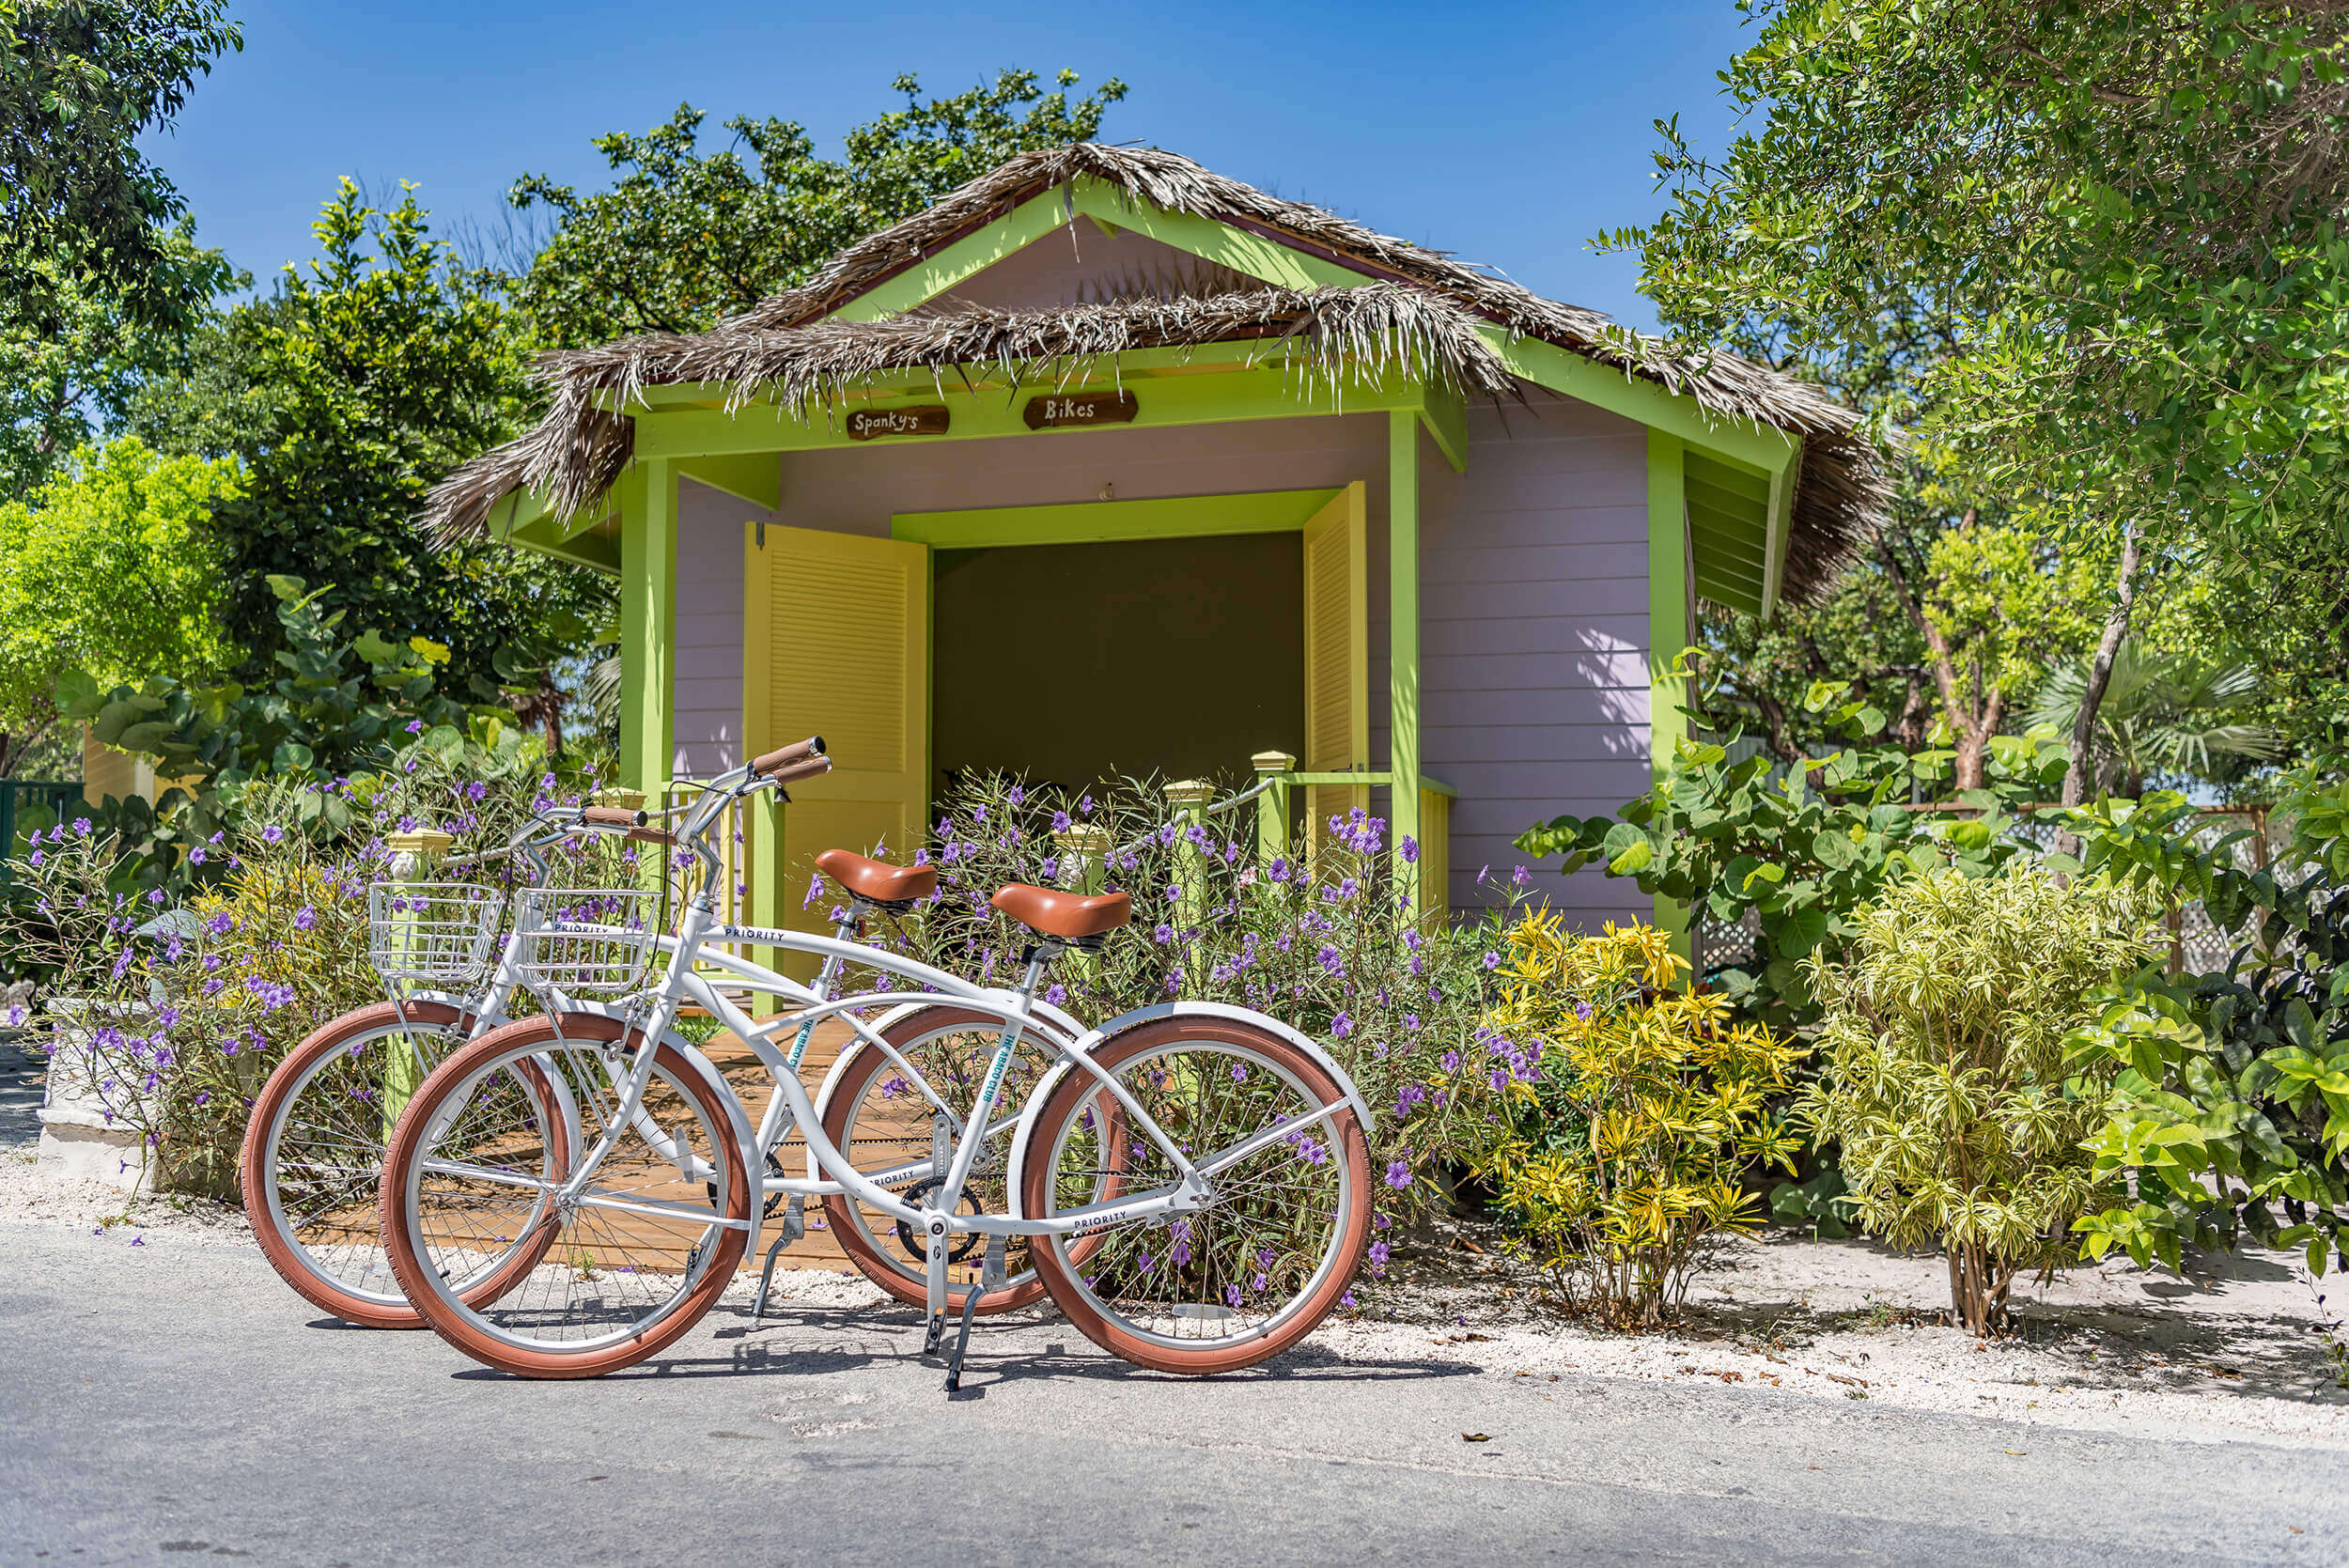 Bike rental space at The Abaco Club